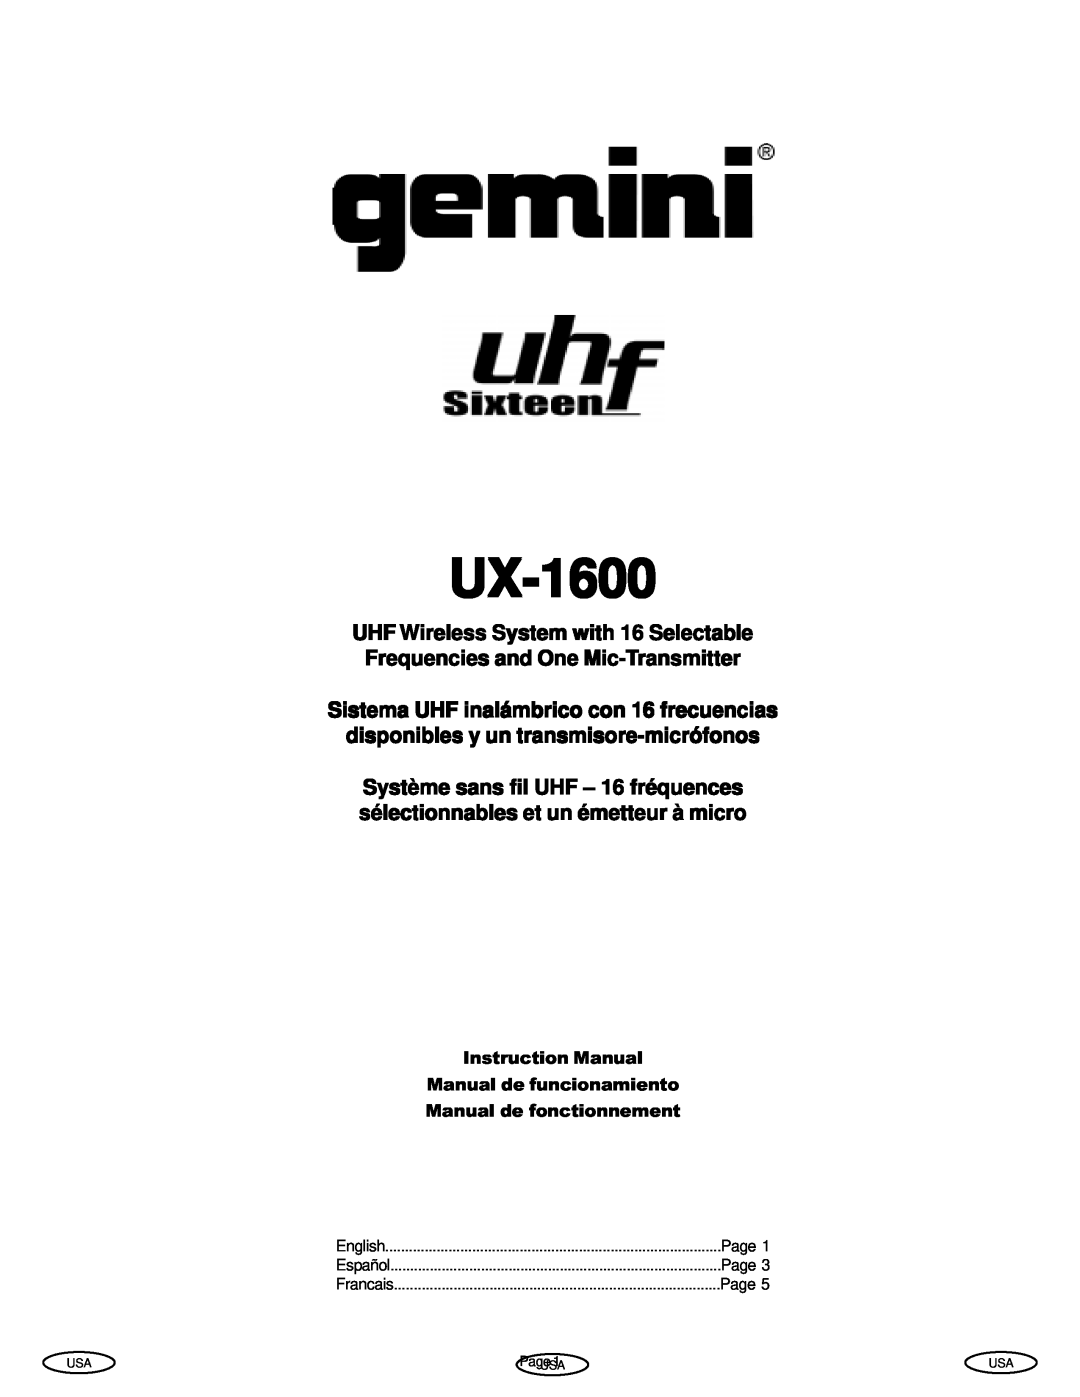 Gemini Industries UX-1600 instruction manual Instruction Manual Manual de funcionamiento Manual de fonctionnement 